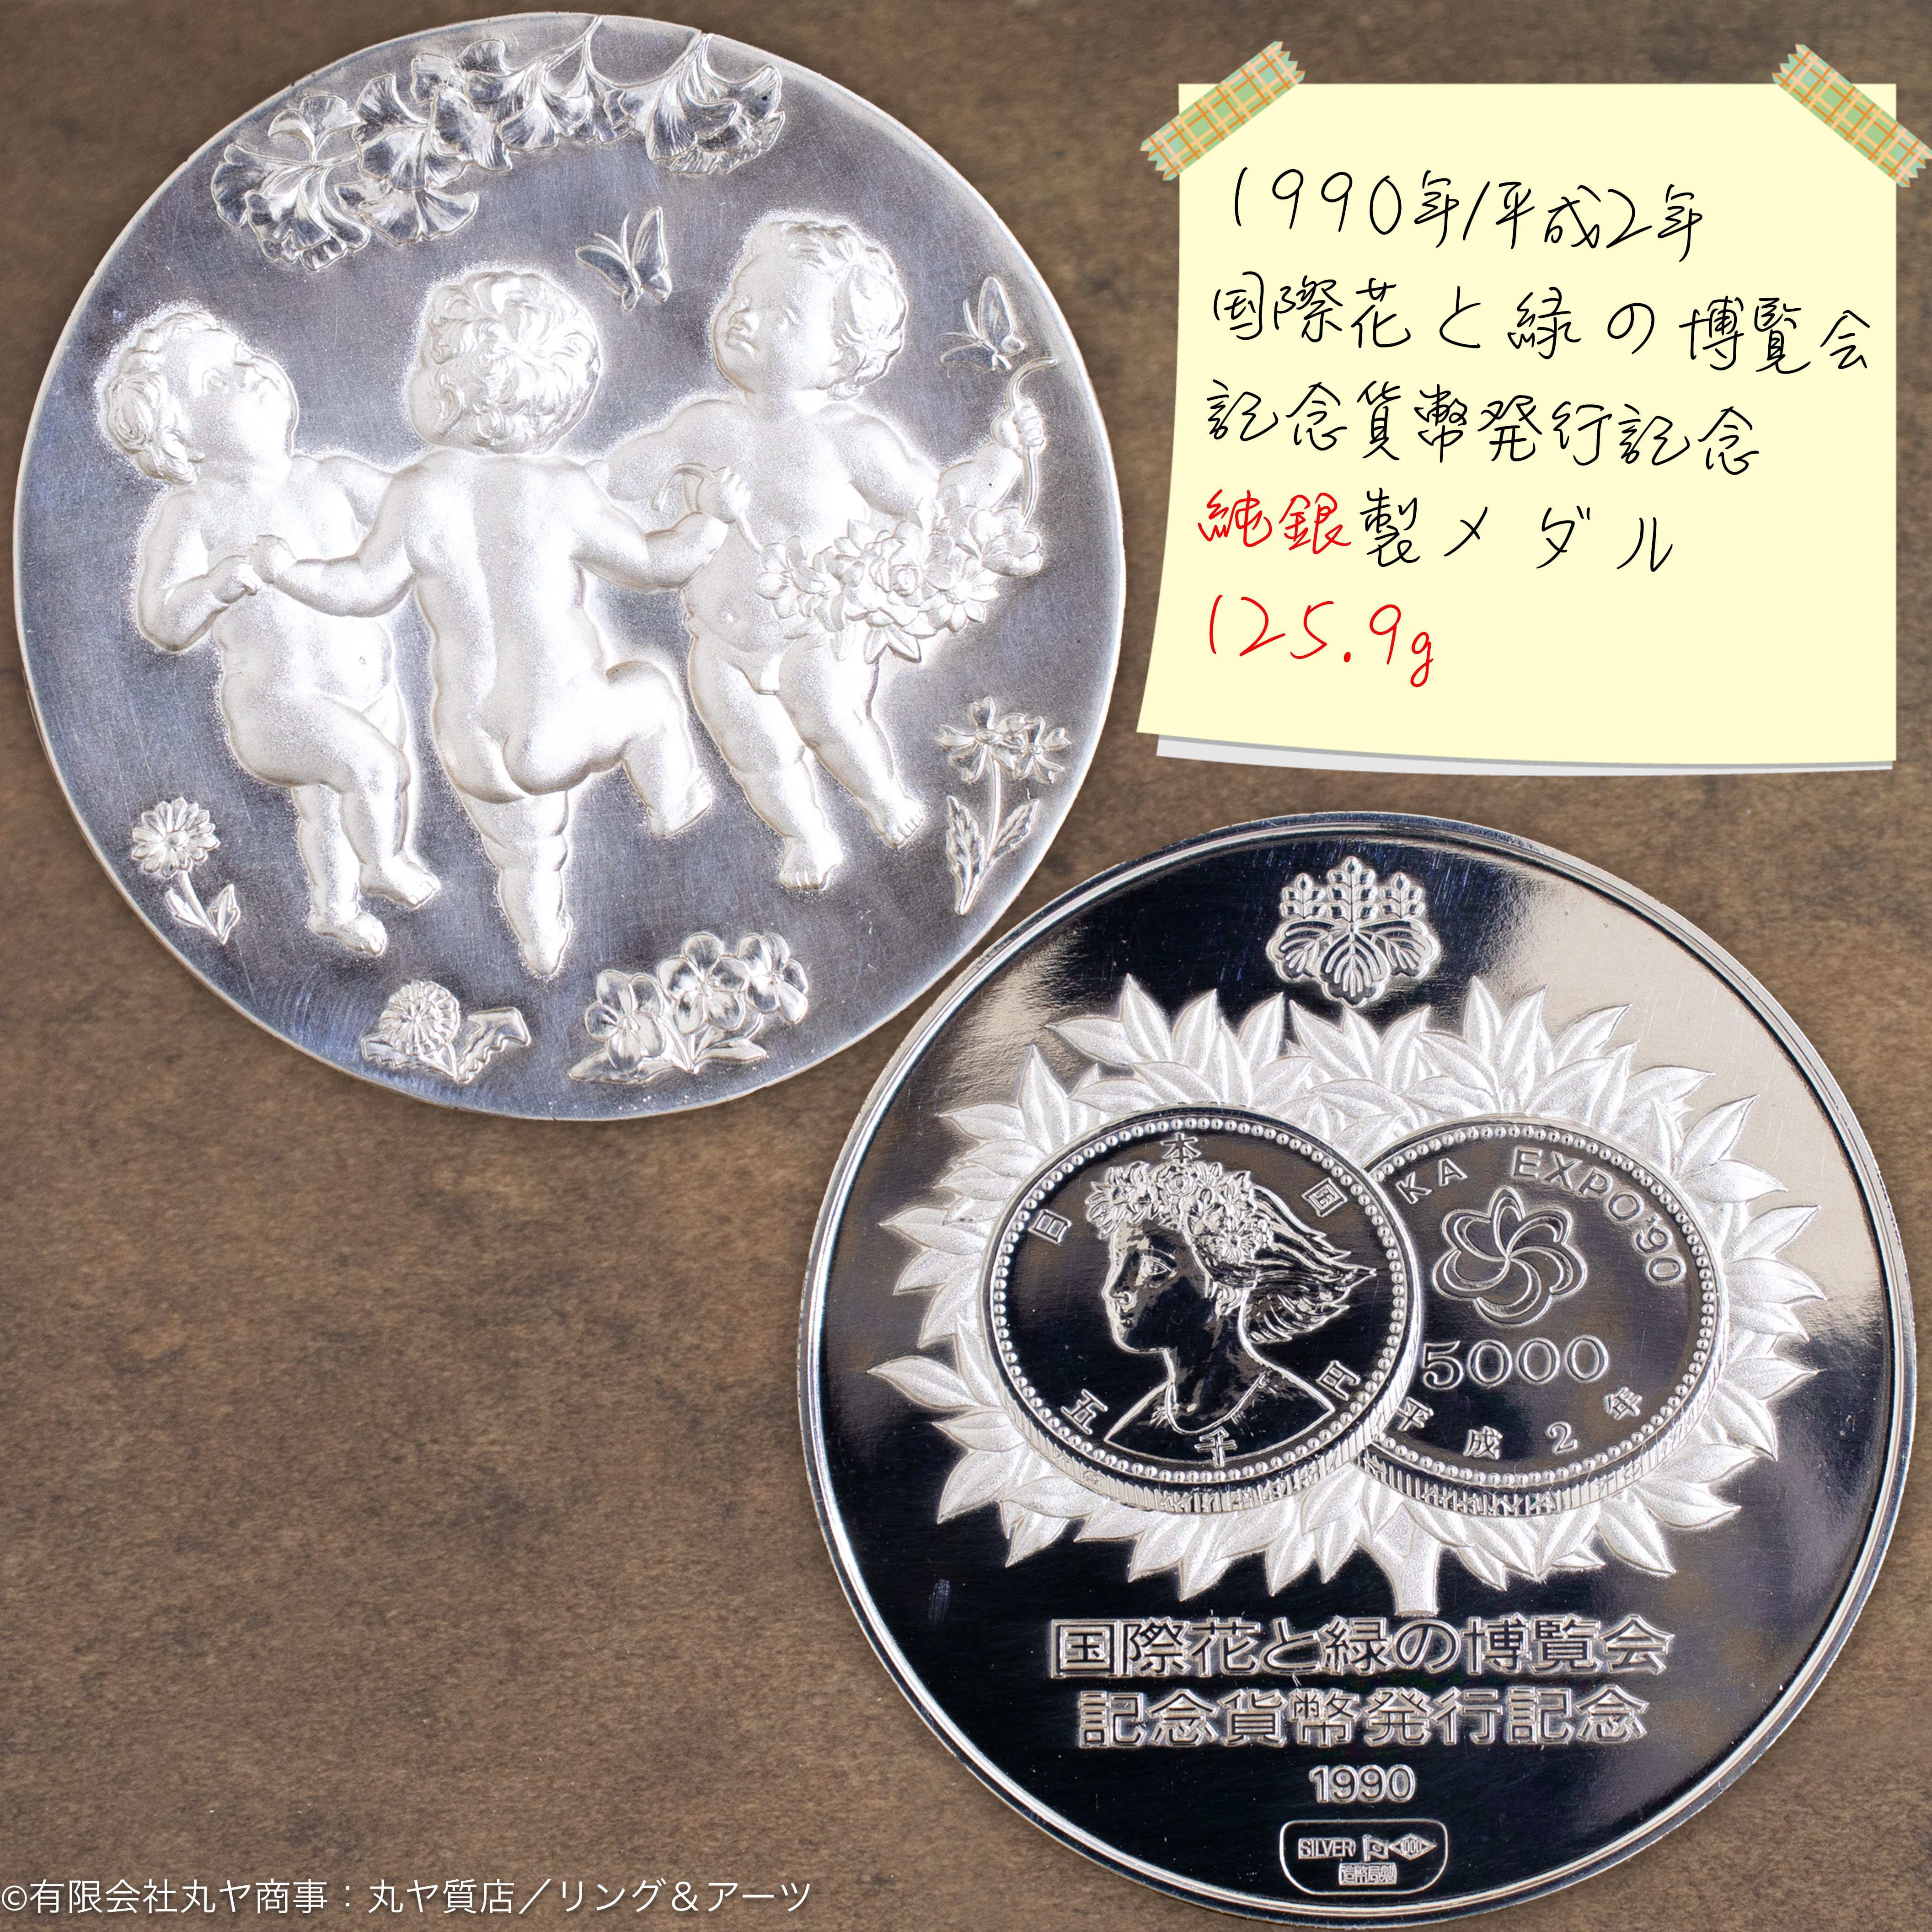 記念硬貨 造幣局国際花と緑の博覧会記念貨幣発行記念メダル